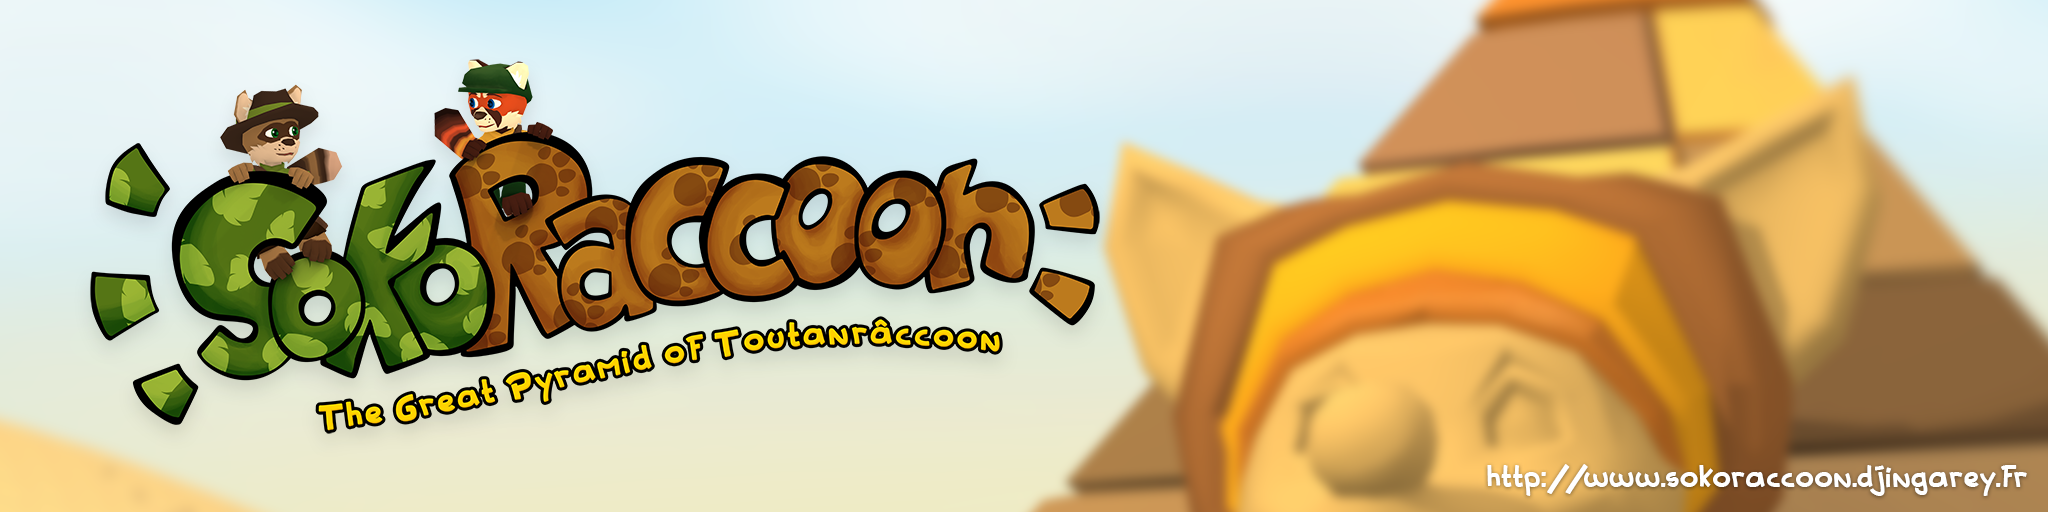 SokoRaccoon - Android version